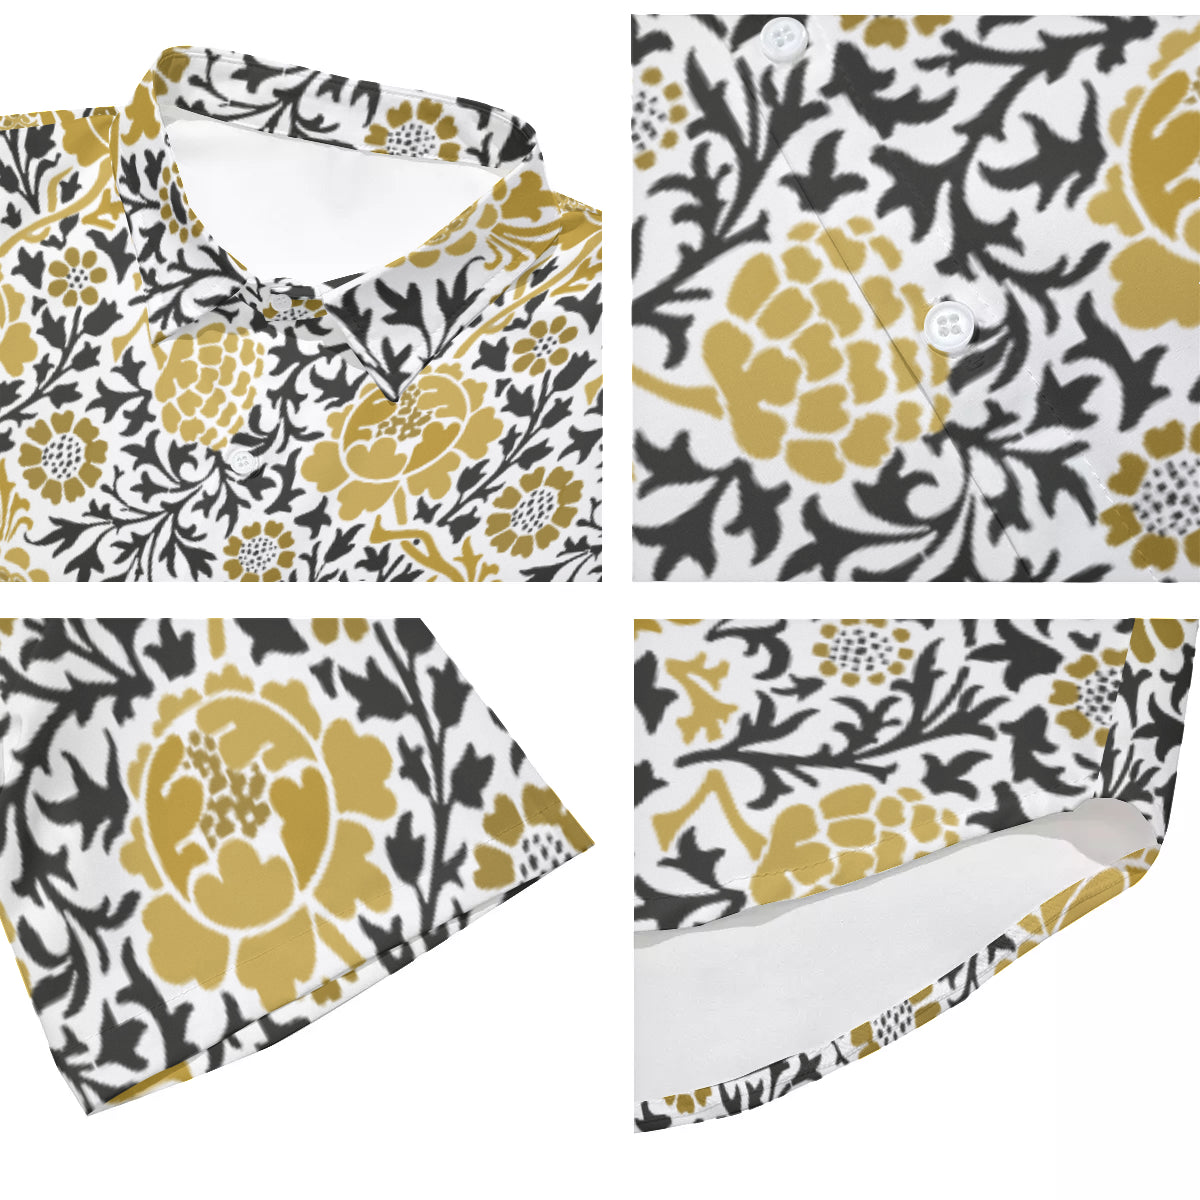 Load image into Gallery viewer, Chrysanthemum Drop Shoulder Short Sleeve Shirt
